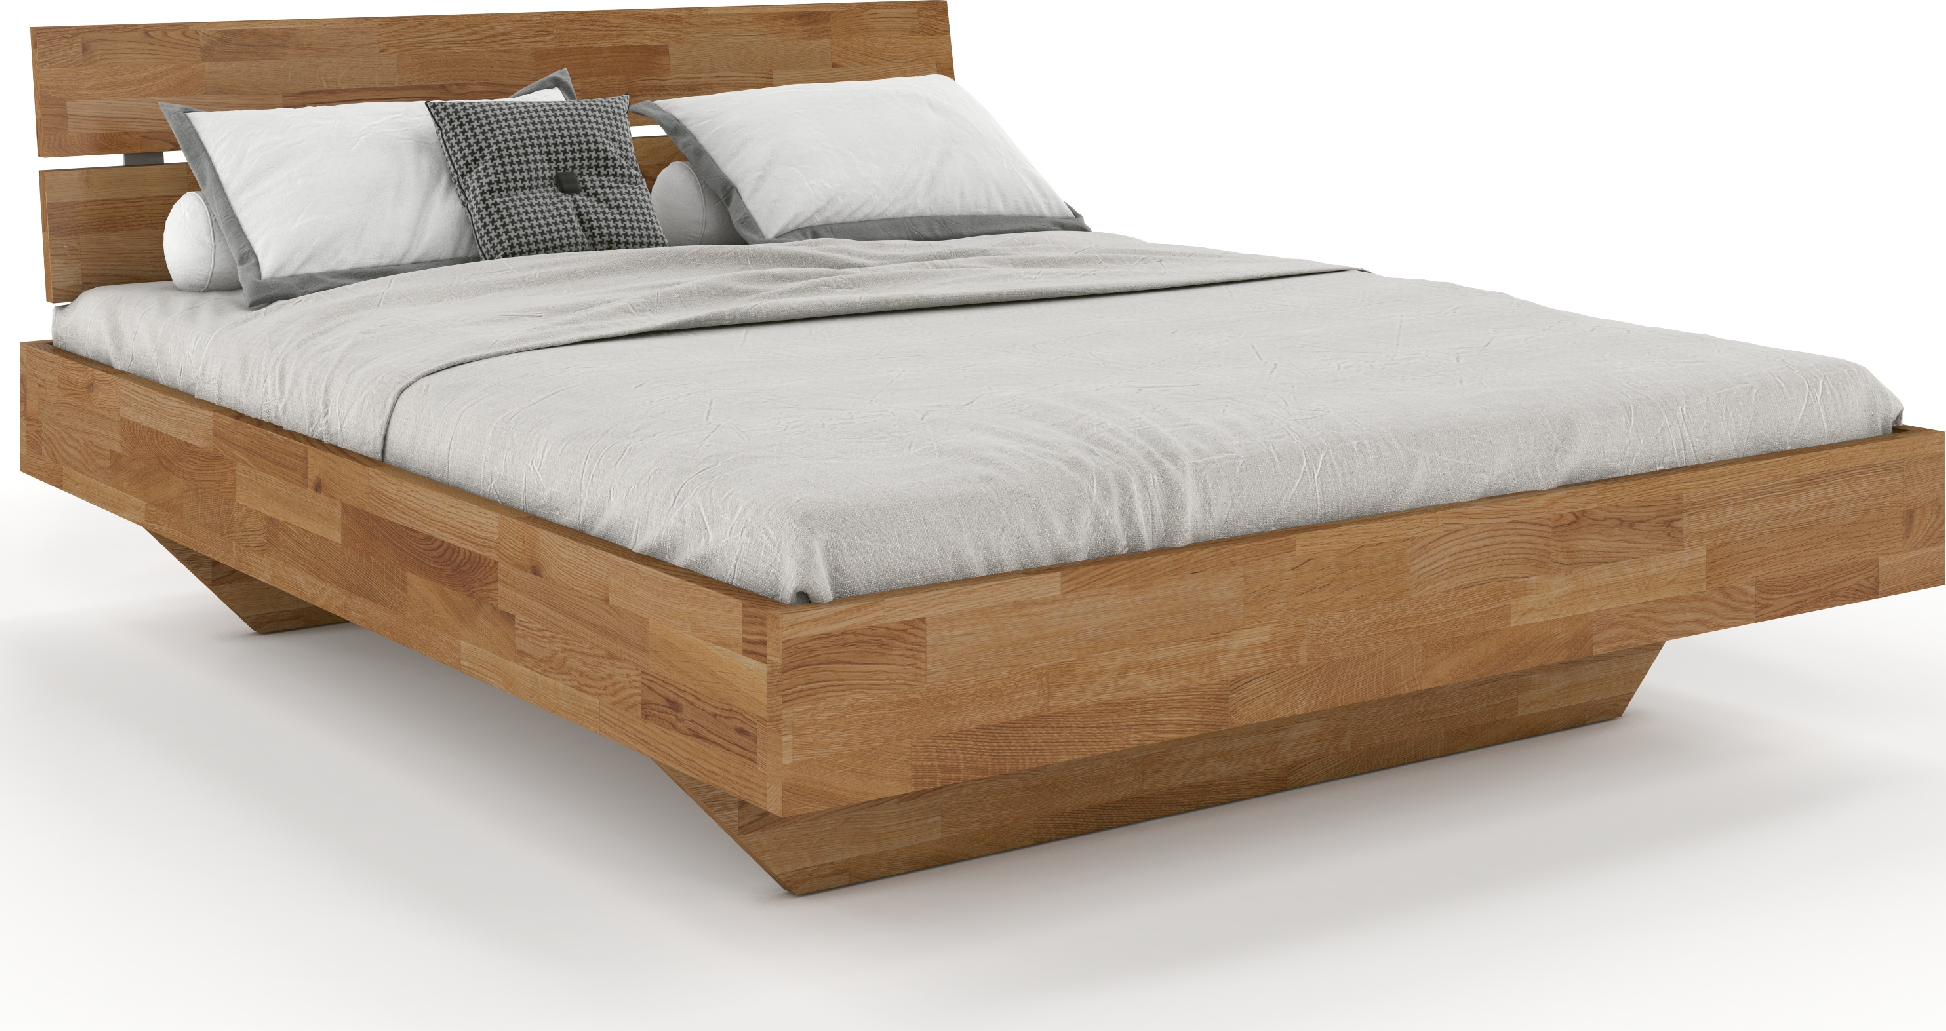 Dubová postel Fred Style 200x200 cm, dub, masiv